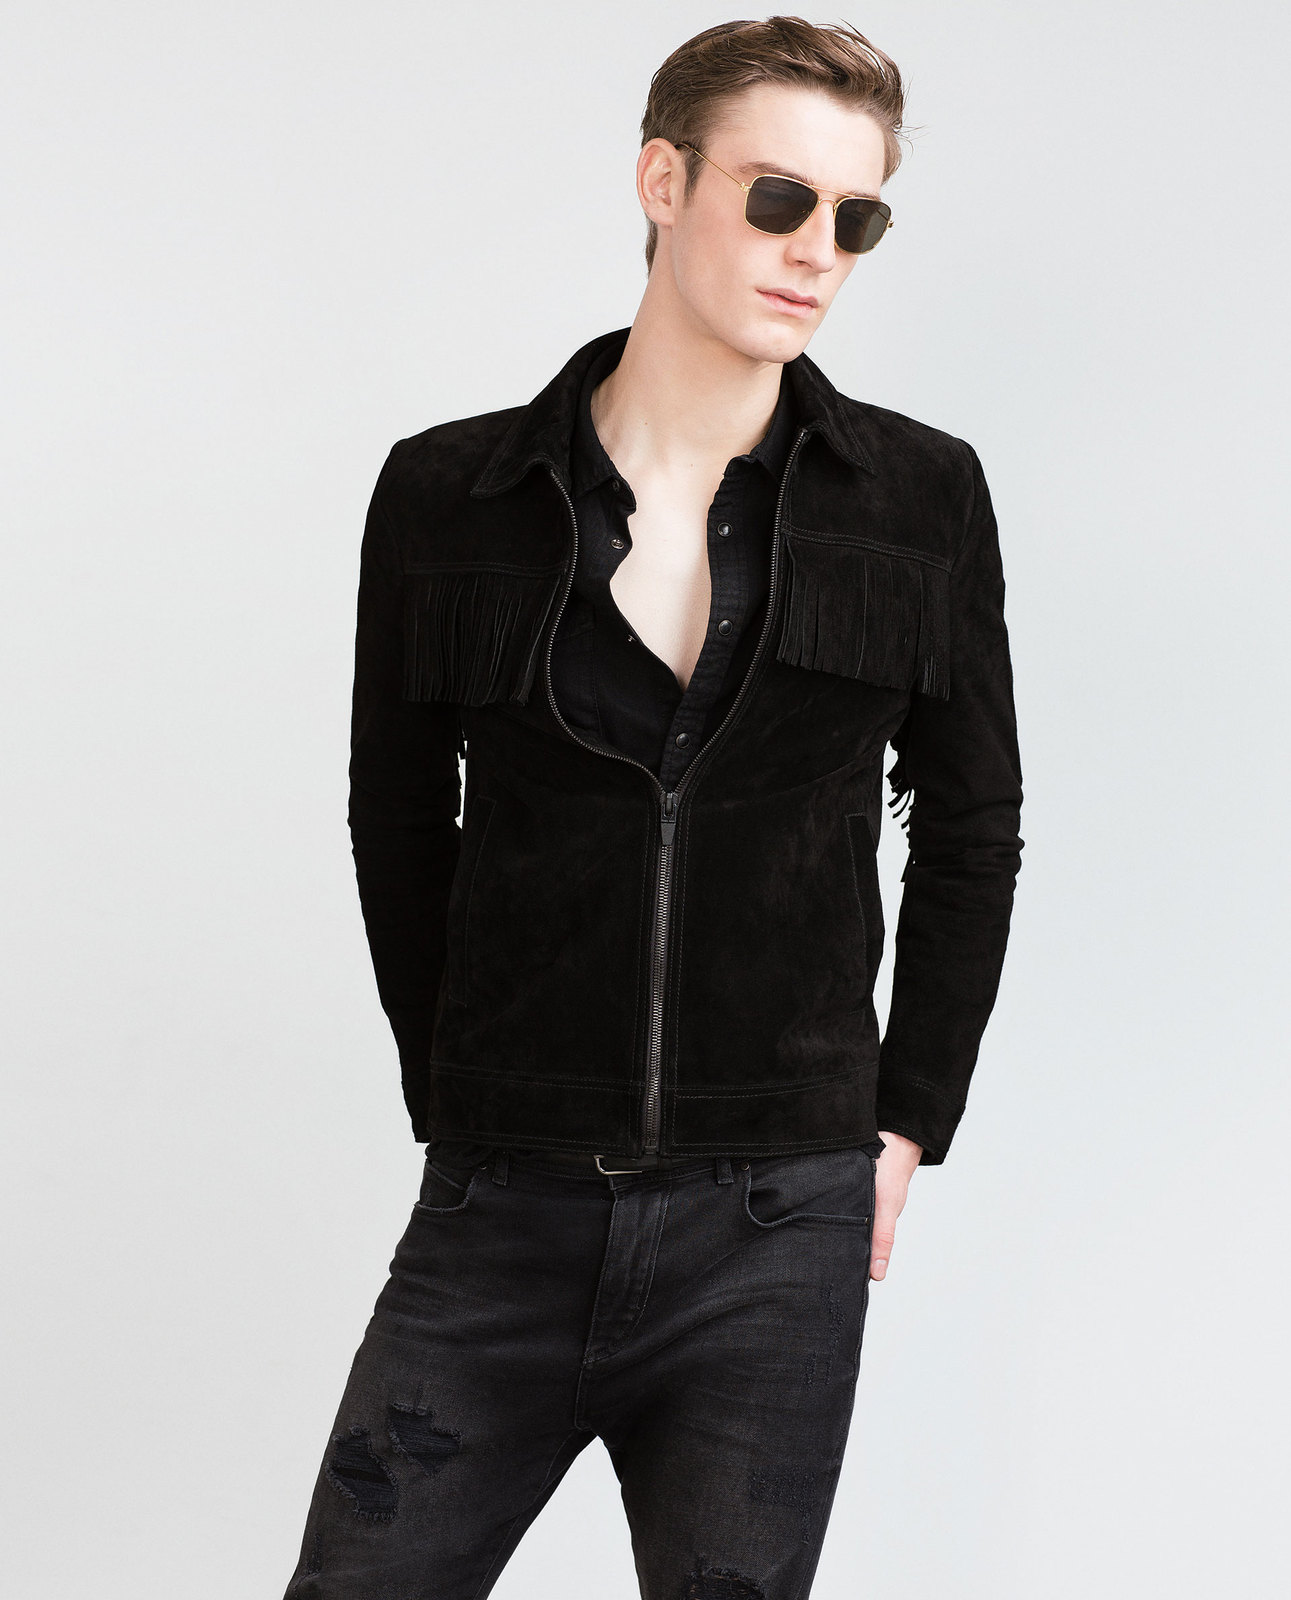 Zara férfi fekete rojtos dzseki 2015.10.15 fotója